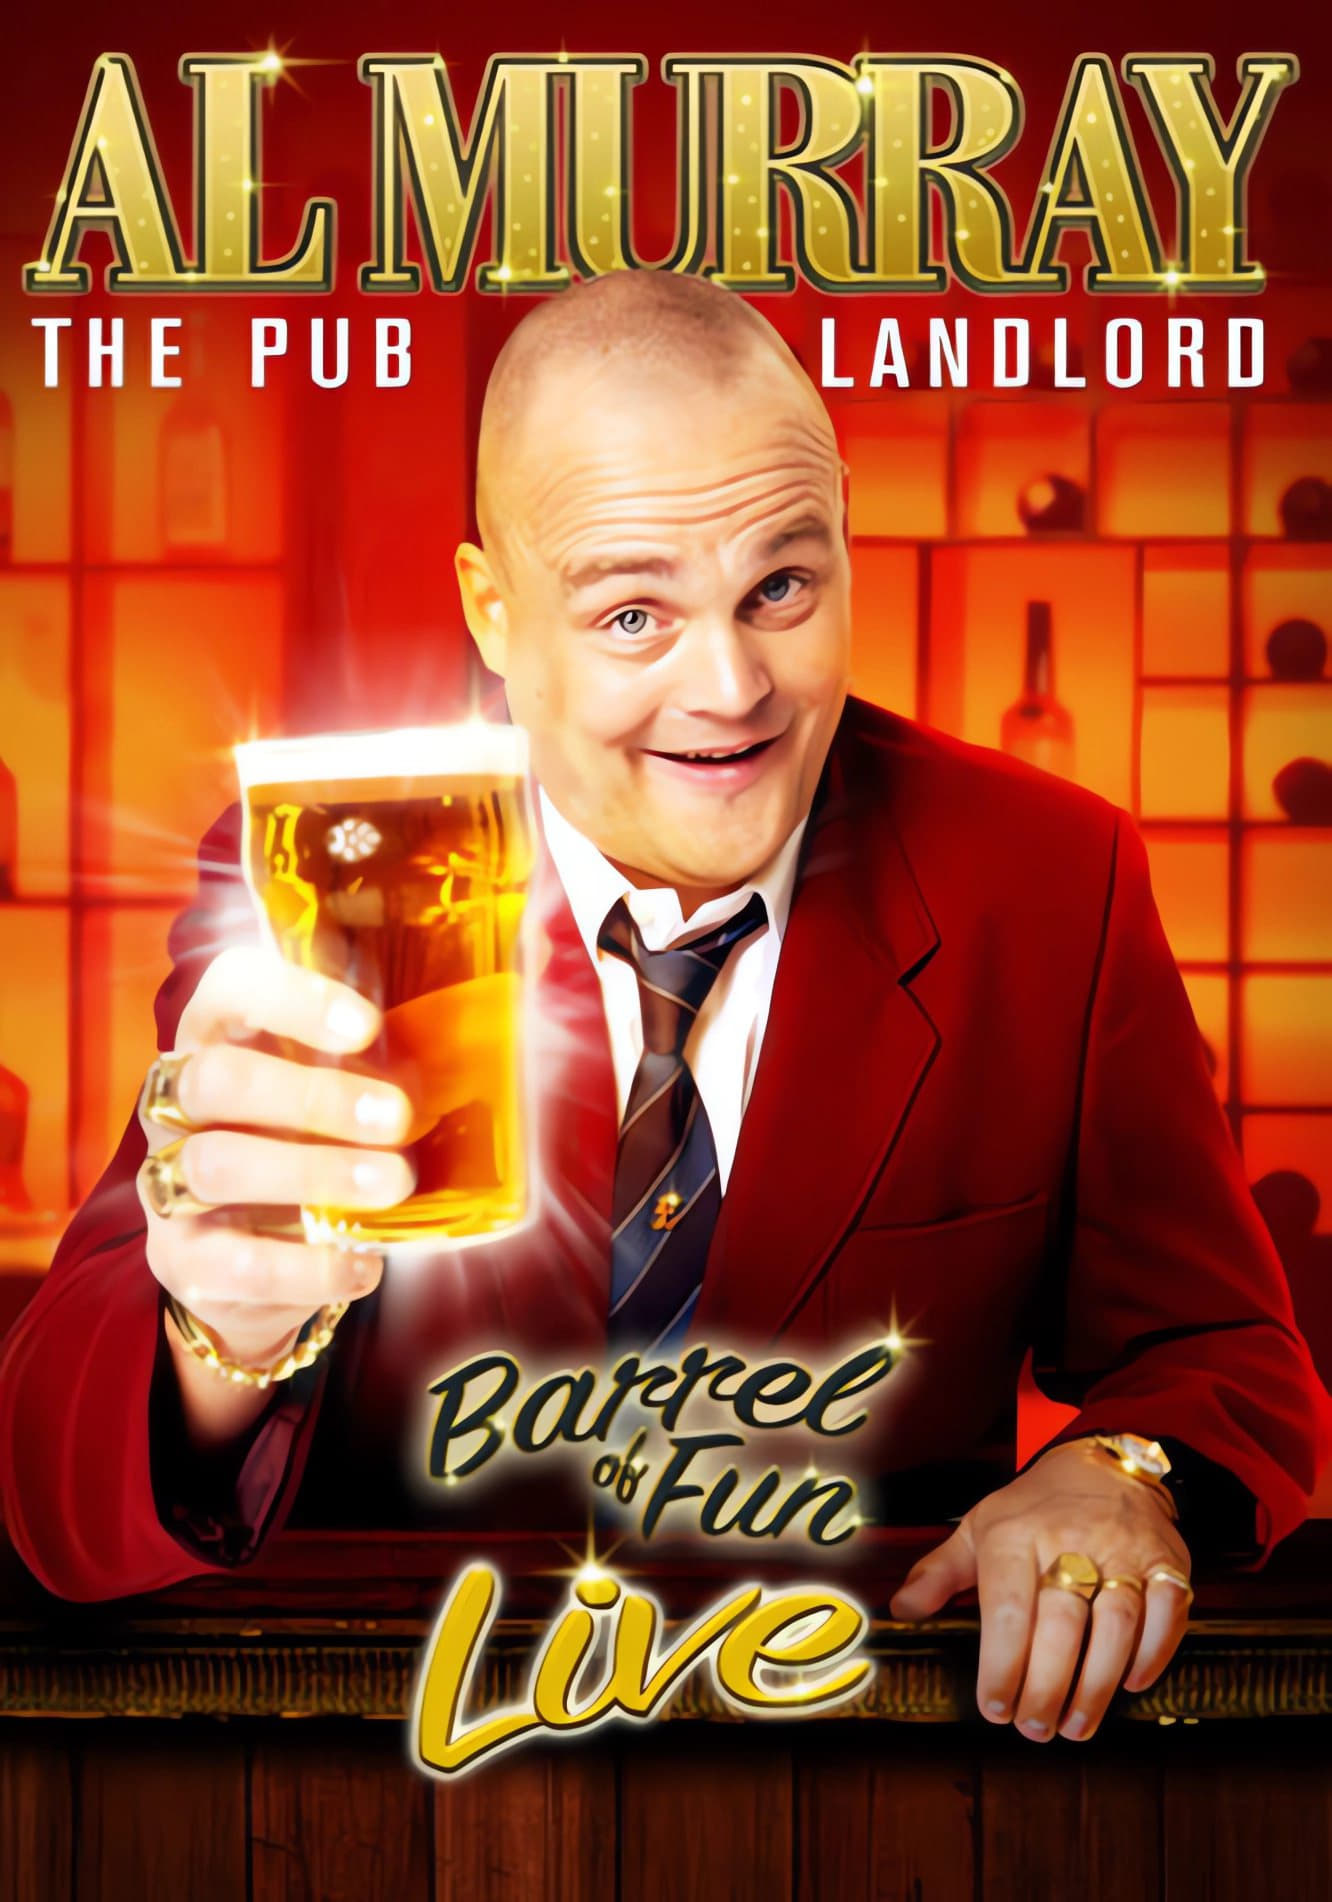 Al Murray, The Pub Landlord - Barrel Of Fun